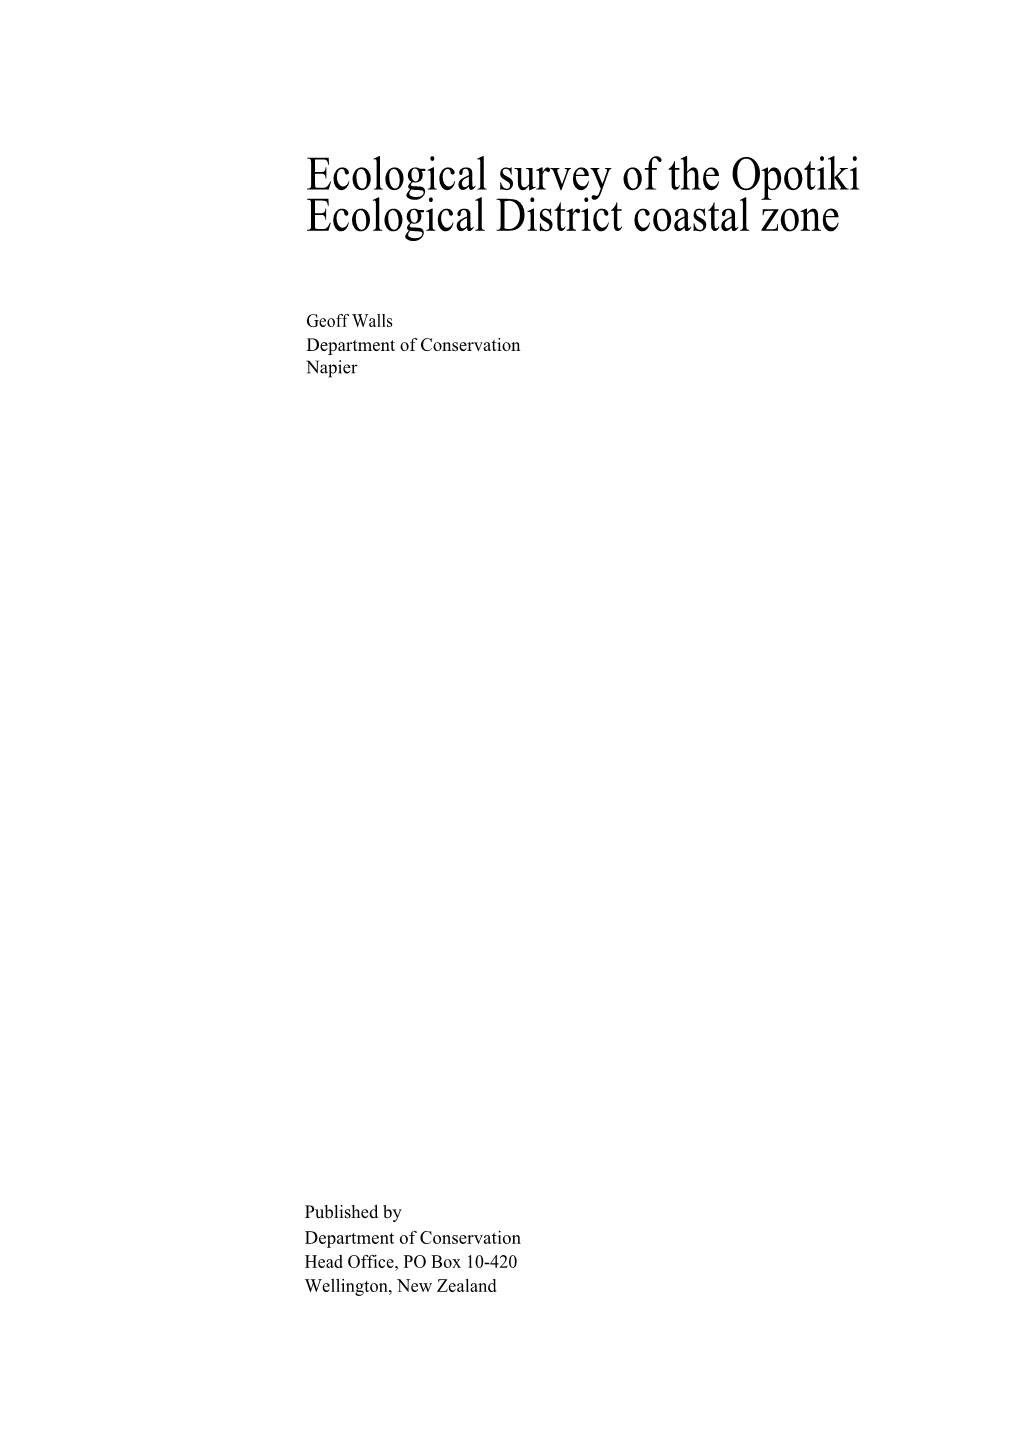 Ecological Survey of the Opotiki Ecological District Coastal Zone